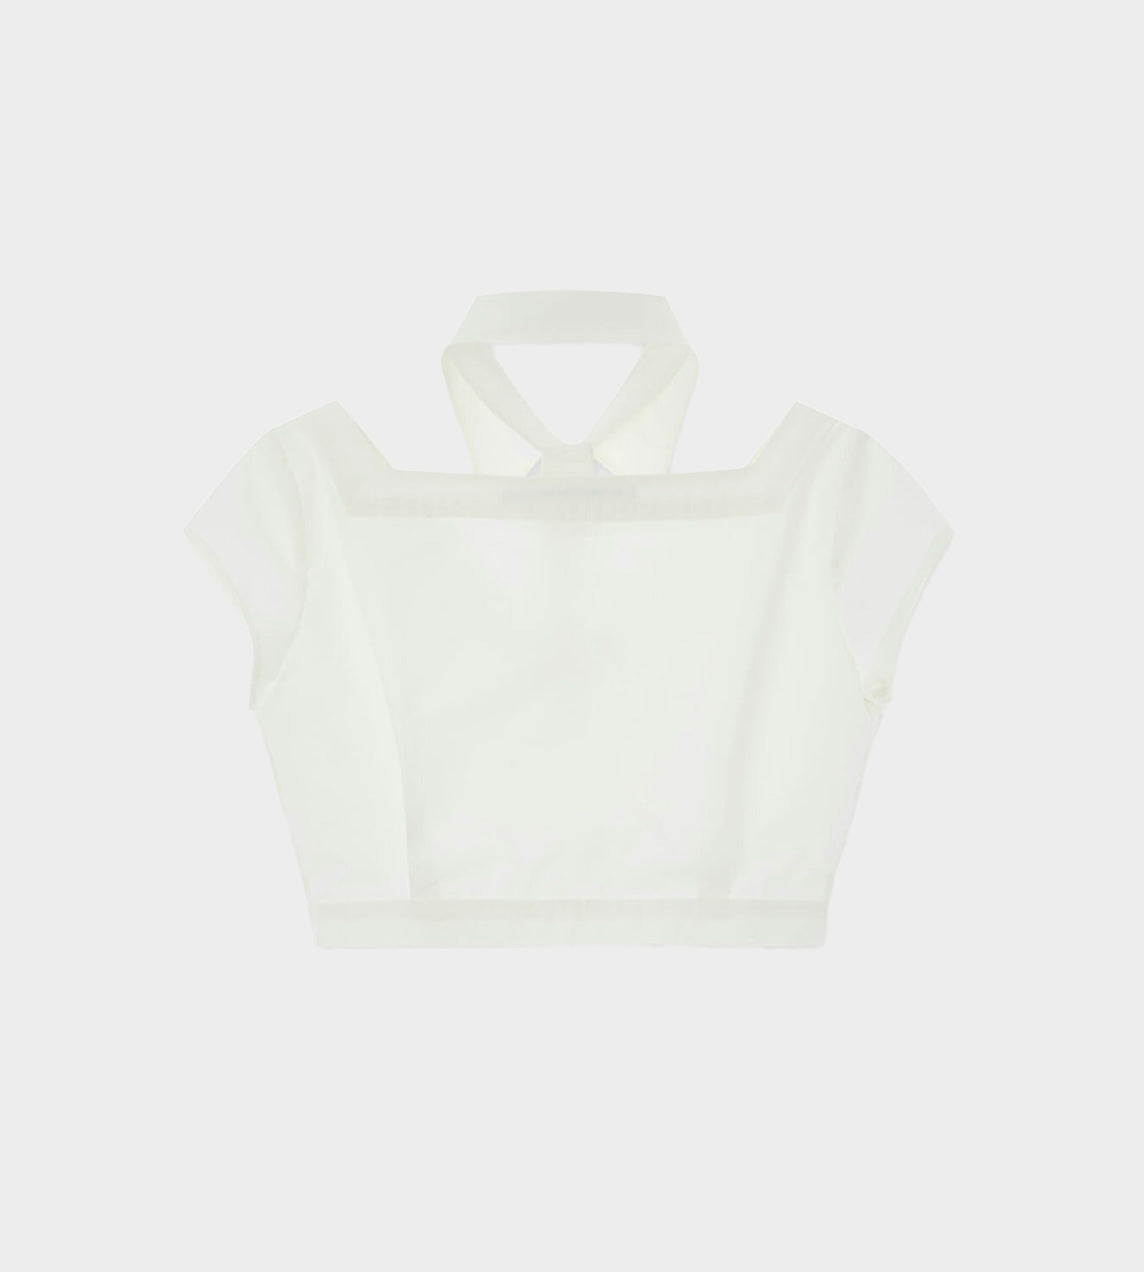 KIMHEKIM - Cut-out Short Sleeve Shirt White